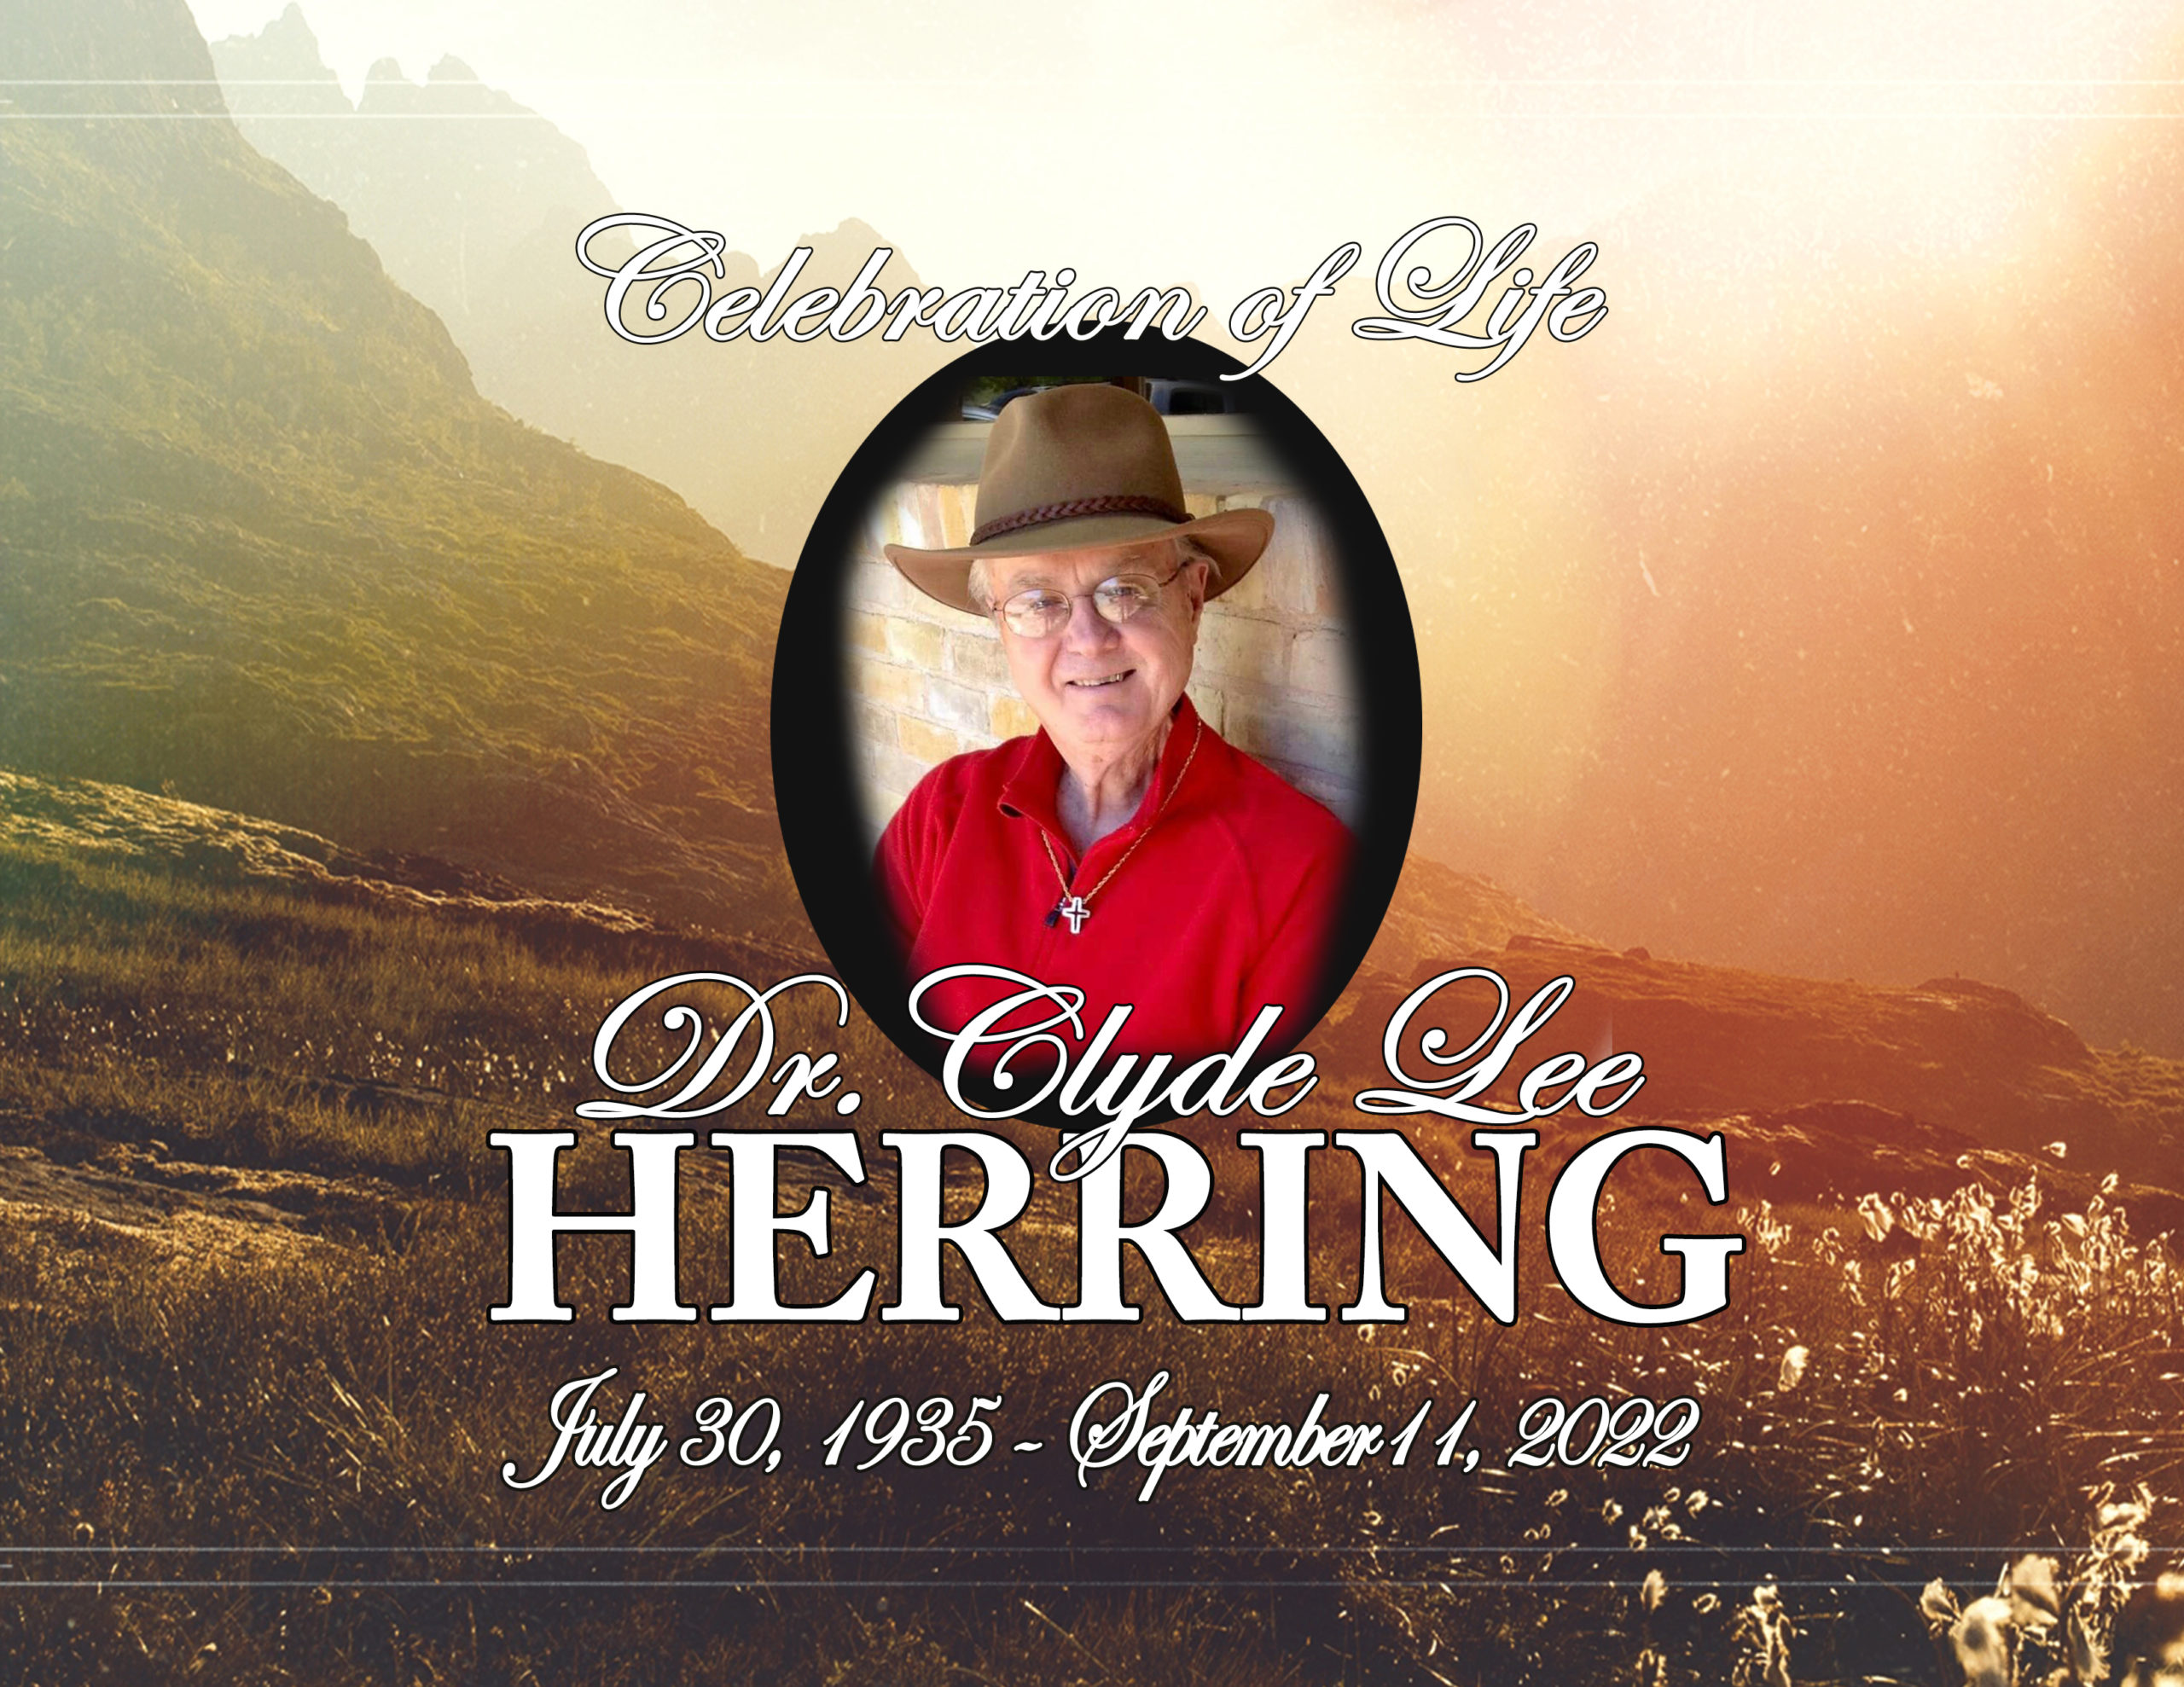 Dr. Clyde Lee Herring Memorial Service